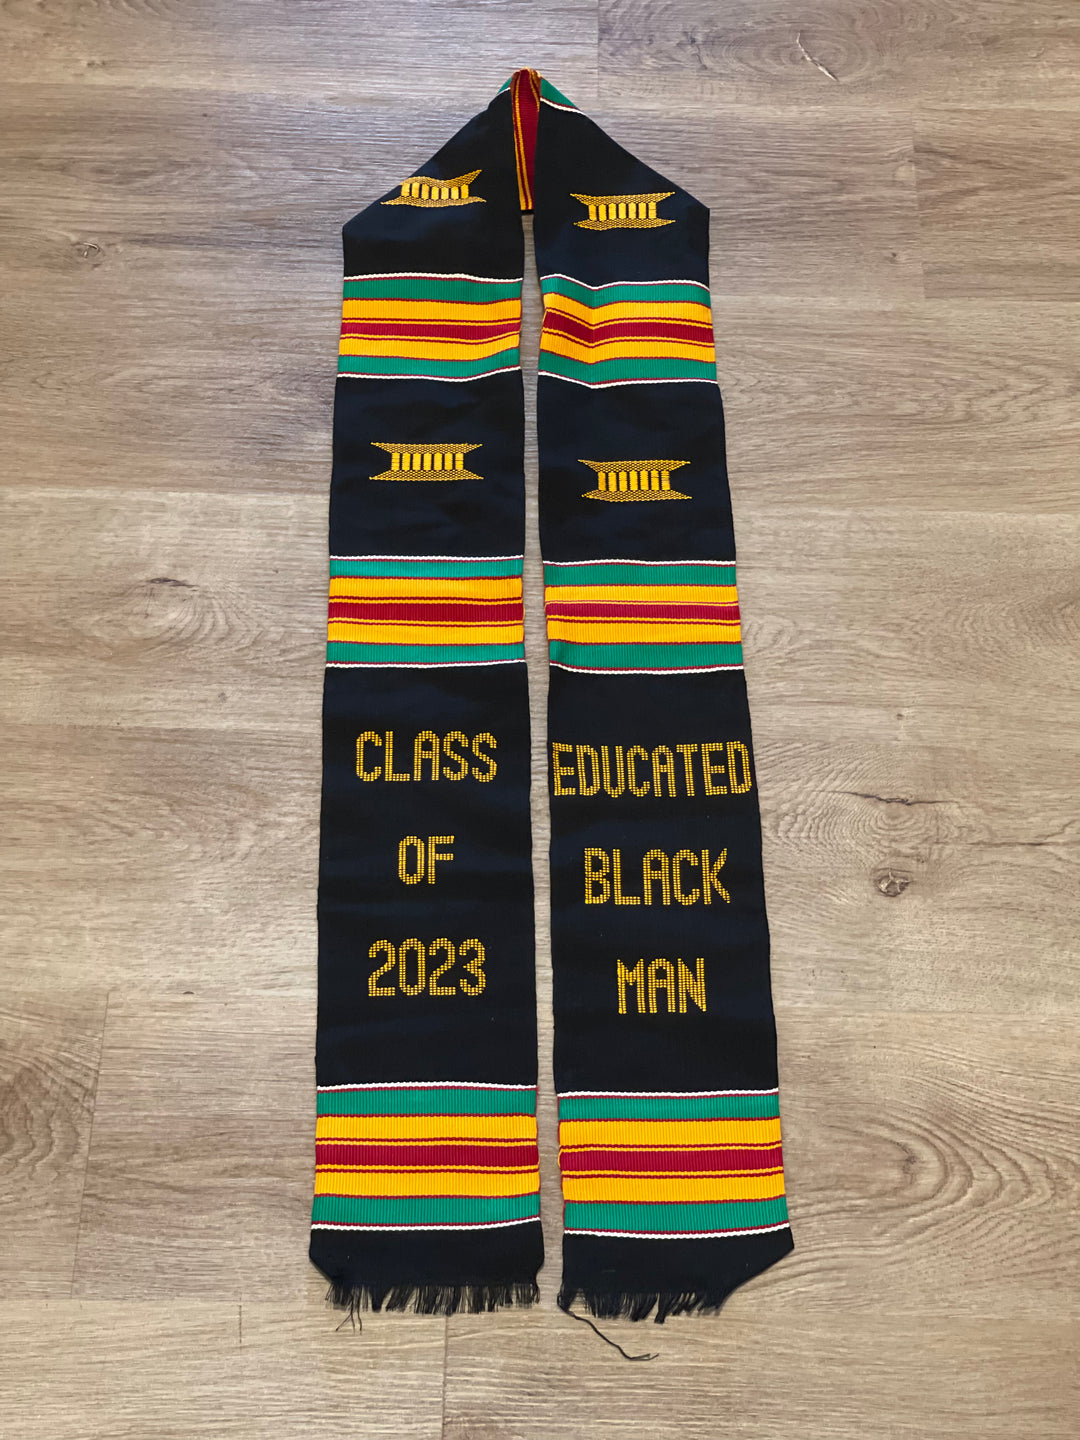 Educated Black Man Class of 2023 Kente Cloth Graduation Stole for Class of 2023 graduates.